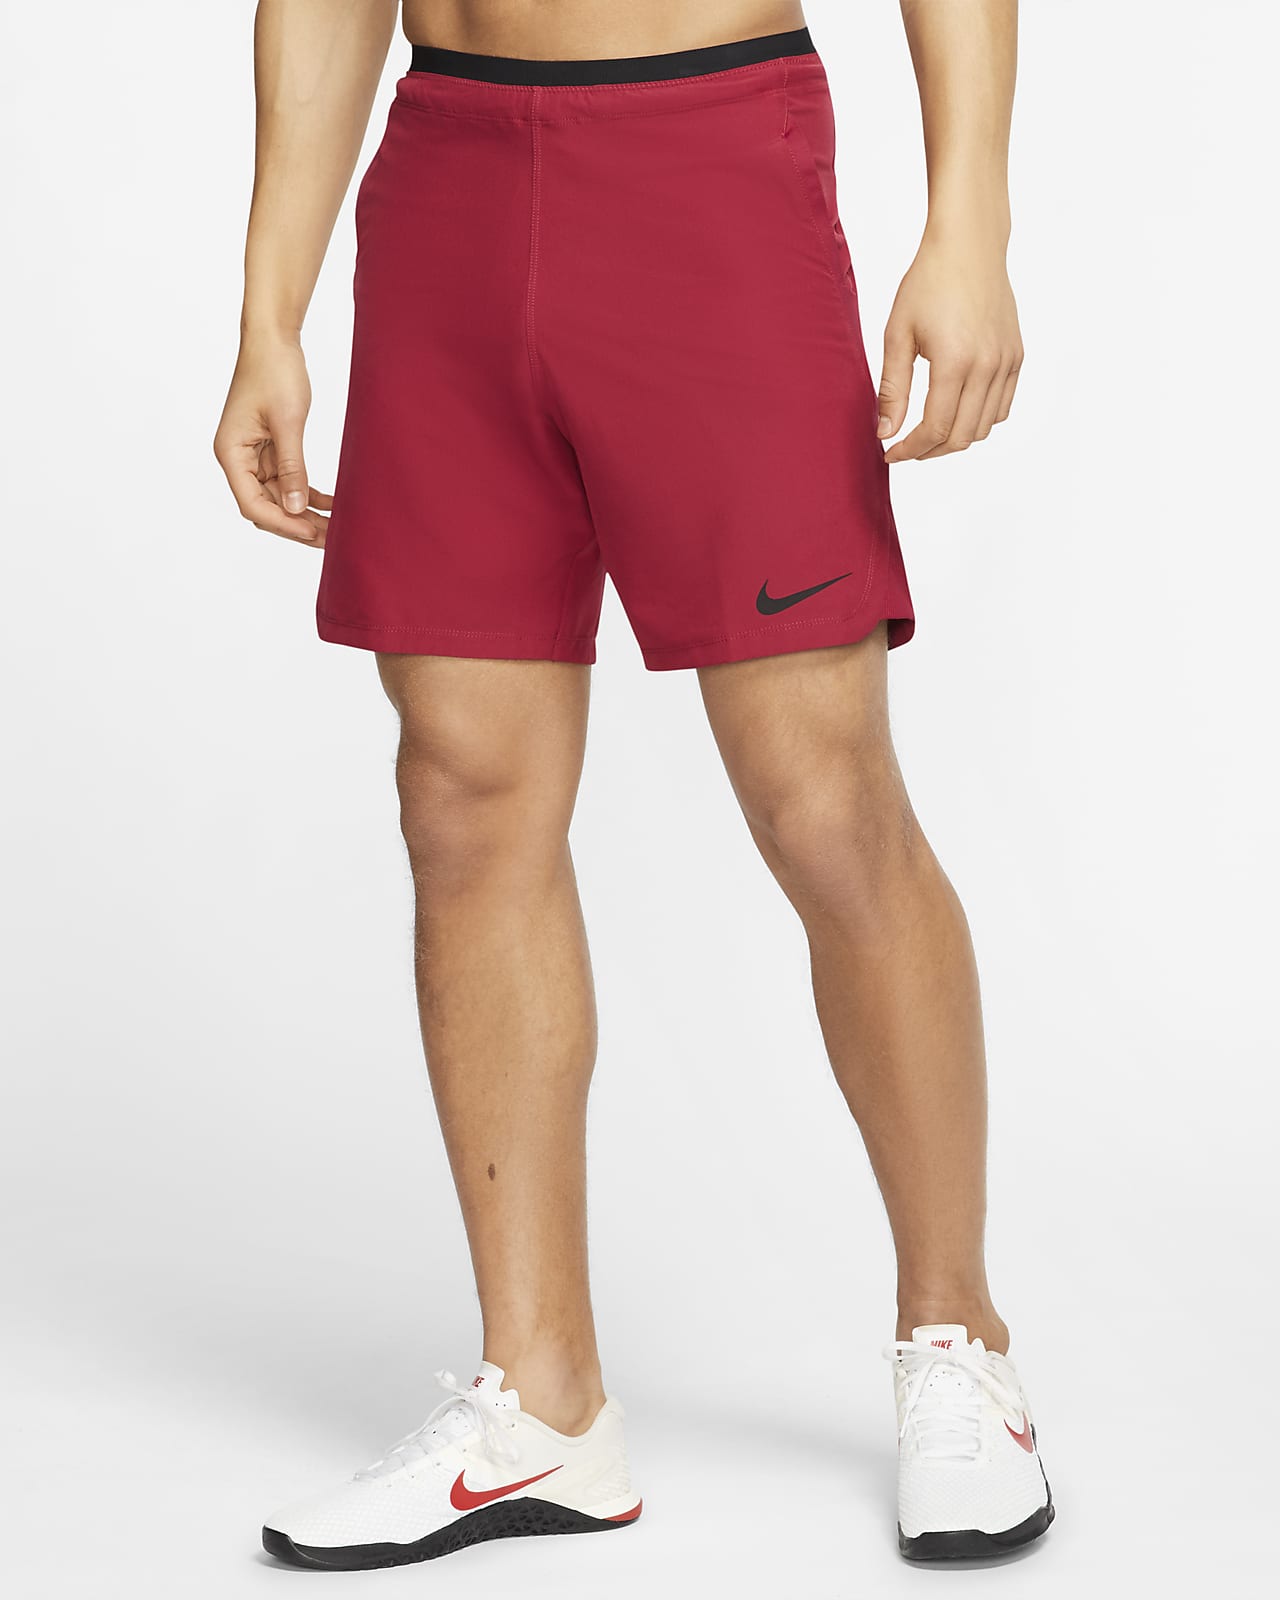 Мужские шорты Nike Pro Flex Rep. Nike RU